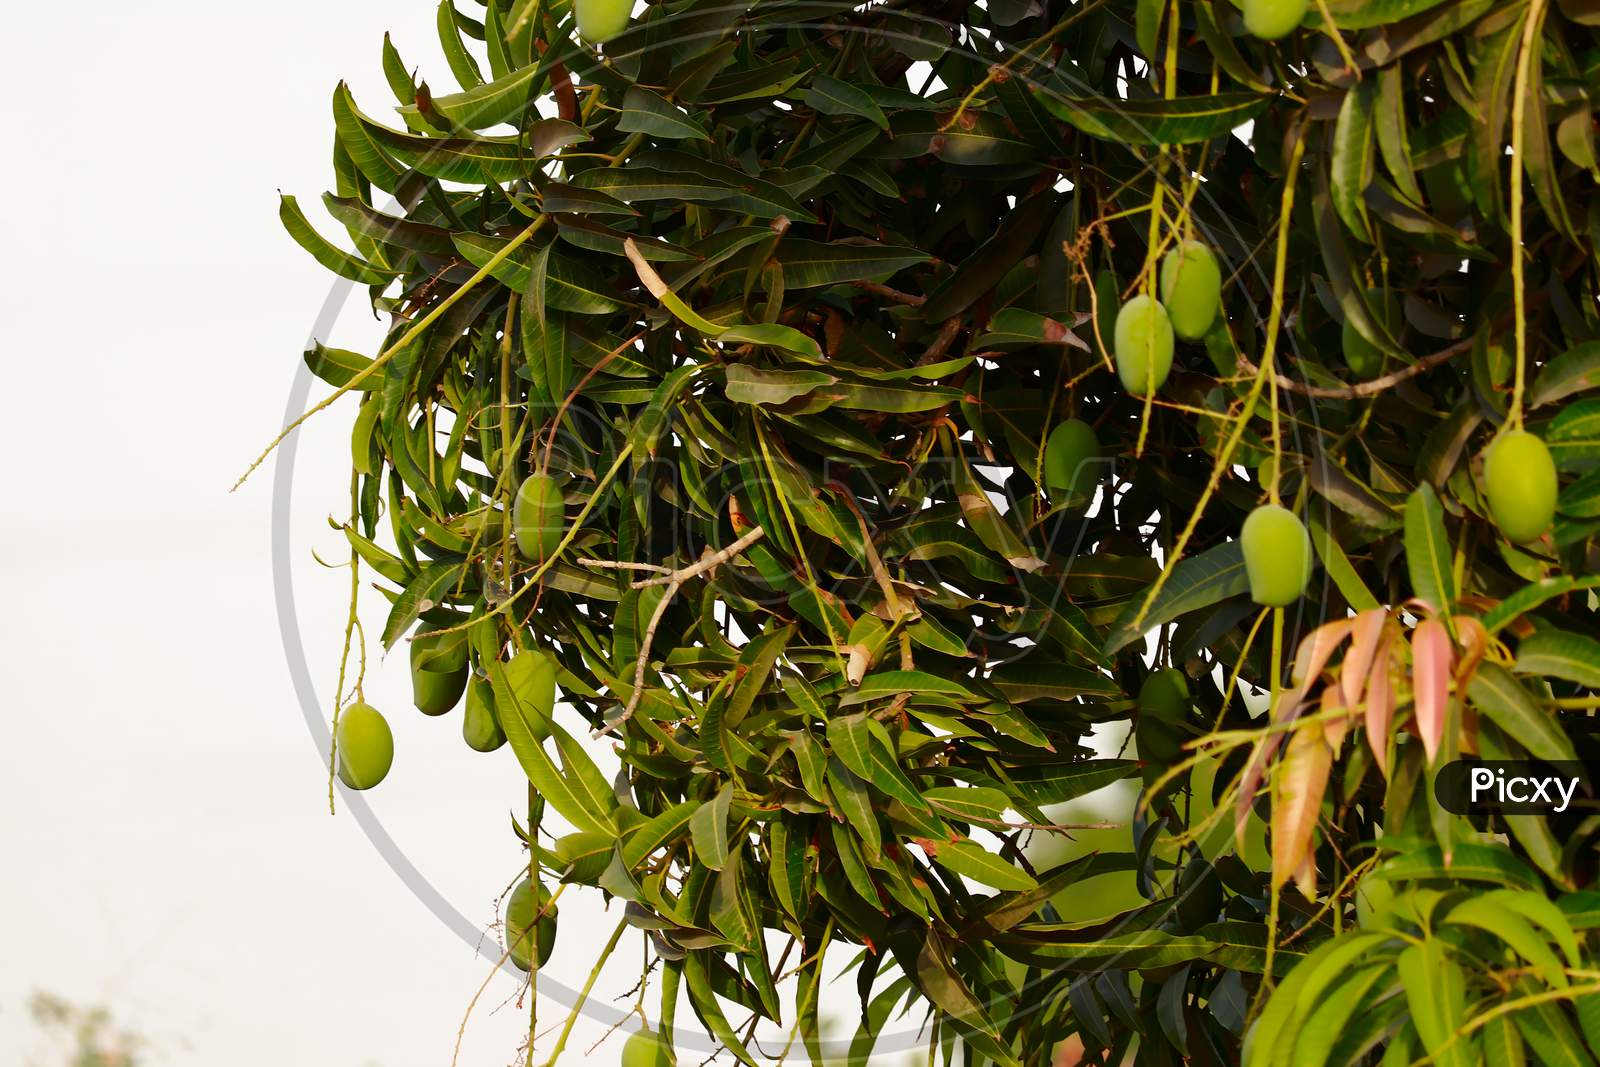 Close Up View Of Raw Mango Fruits,Footage Of Many Mango Fruit Hanging On Mango Tree,Plantations With Organic Mango Trees With Many Sweet Ripe Mango Fruits Ready For Harvest,Selective Focus